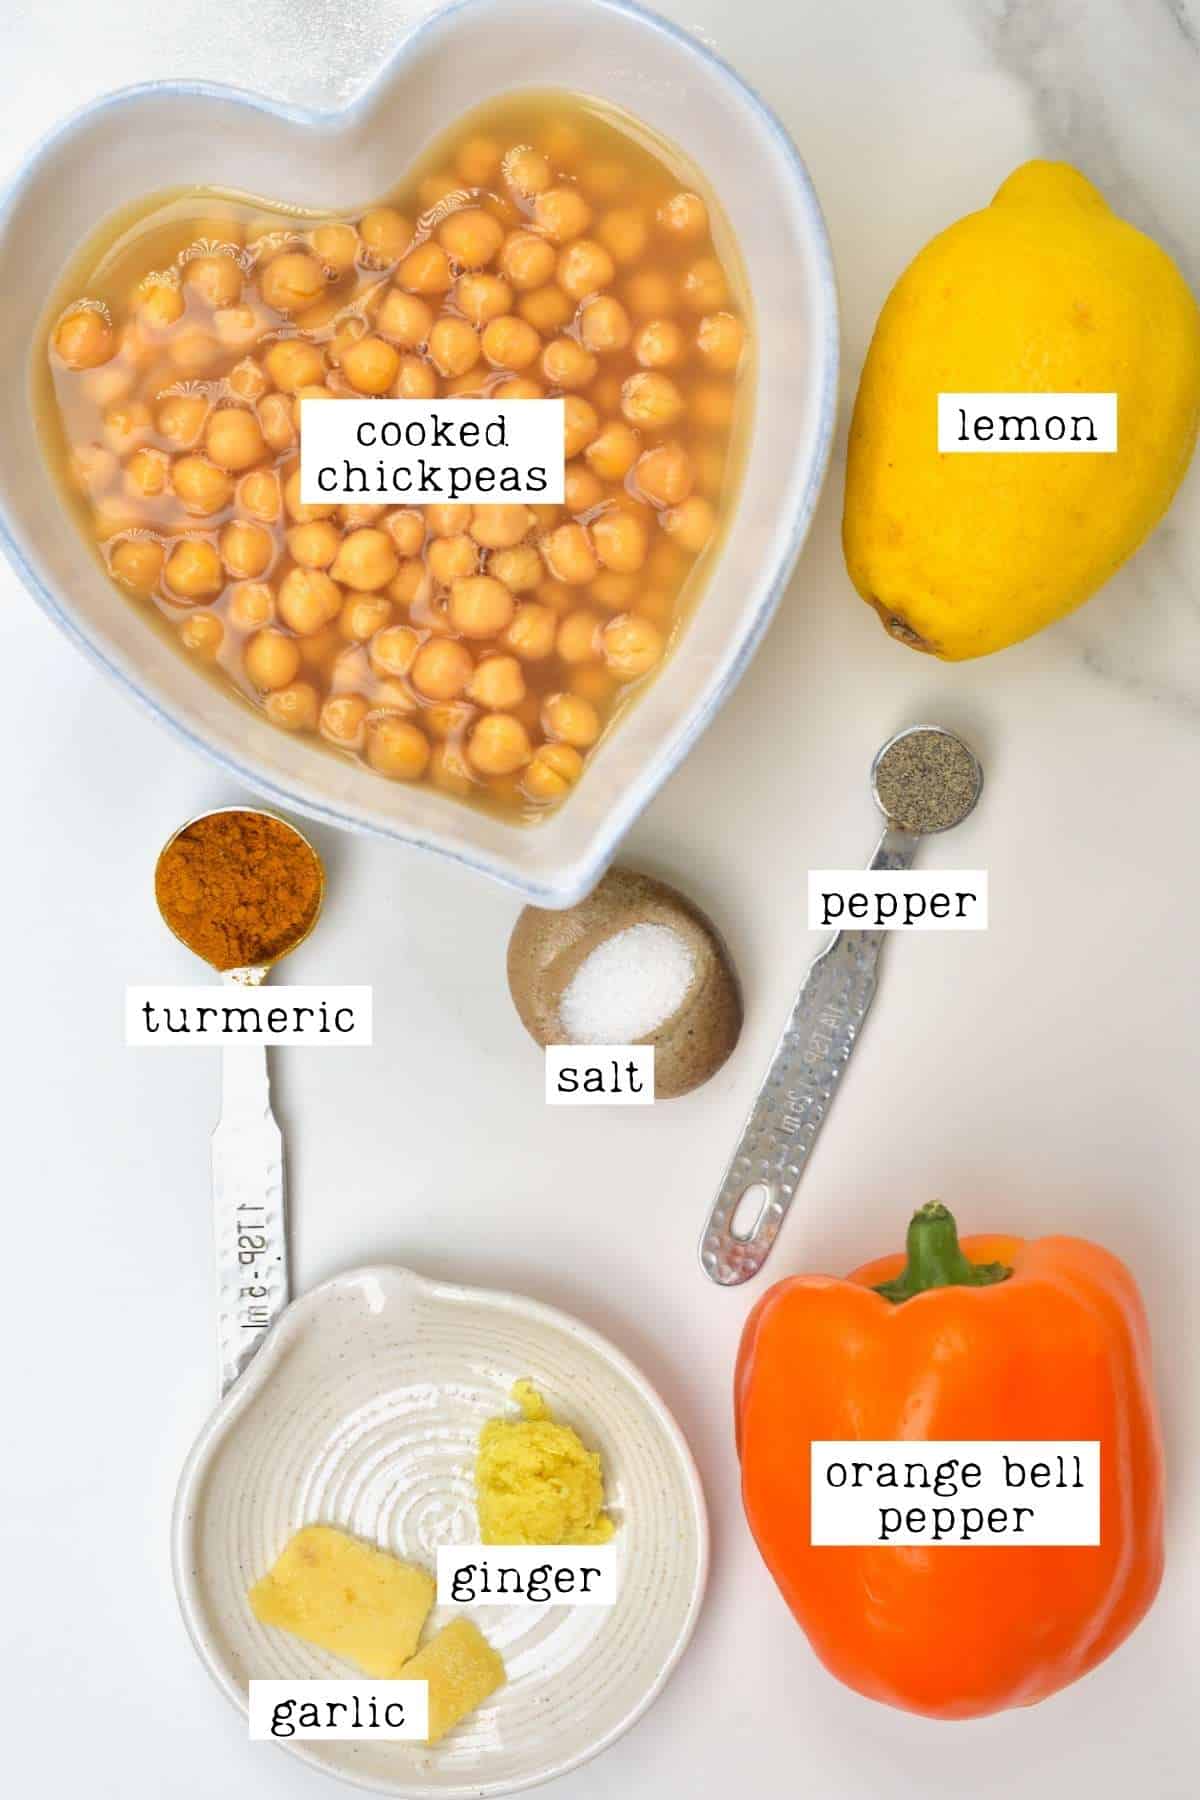 Ingredients for turmeric hummus